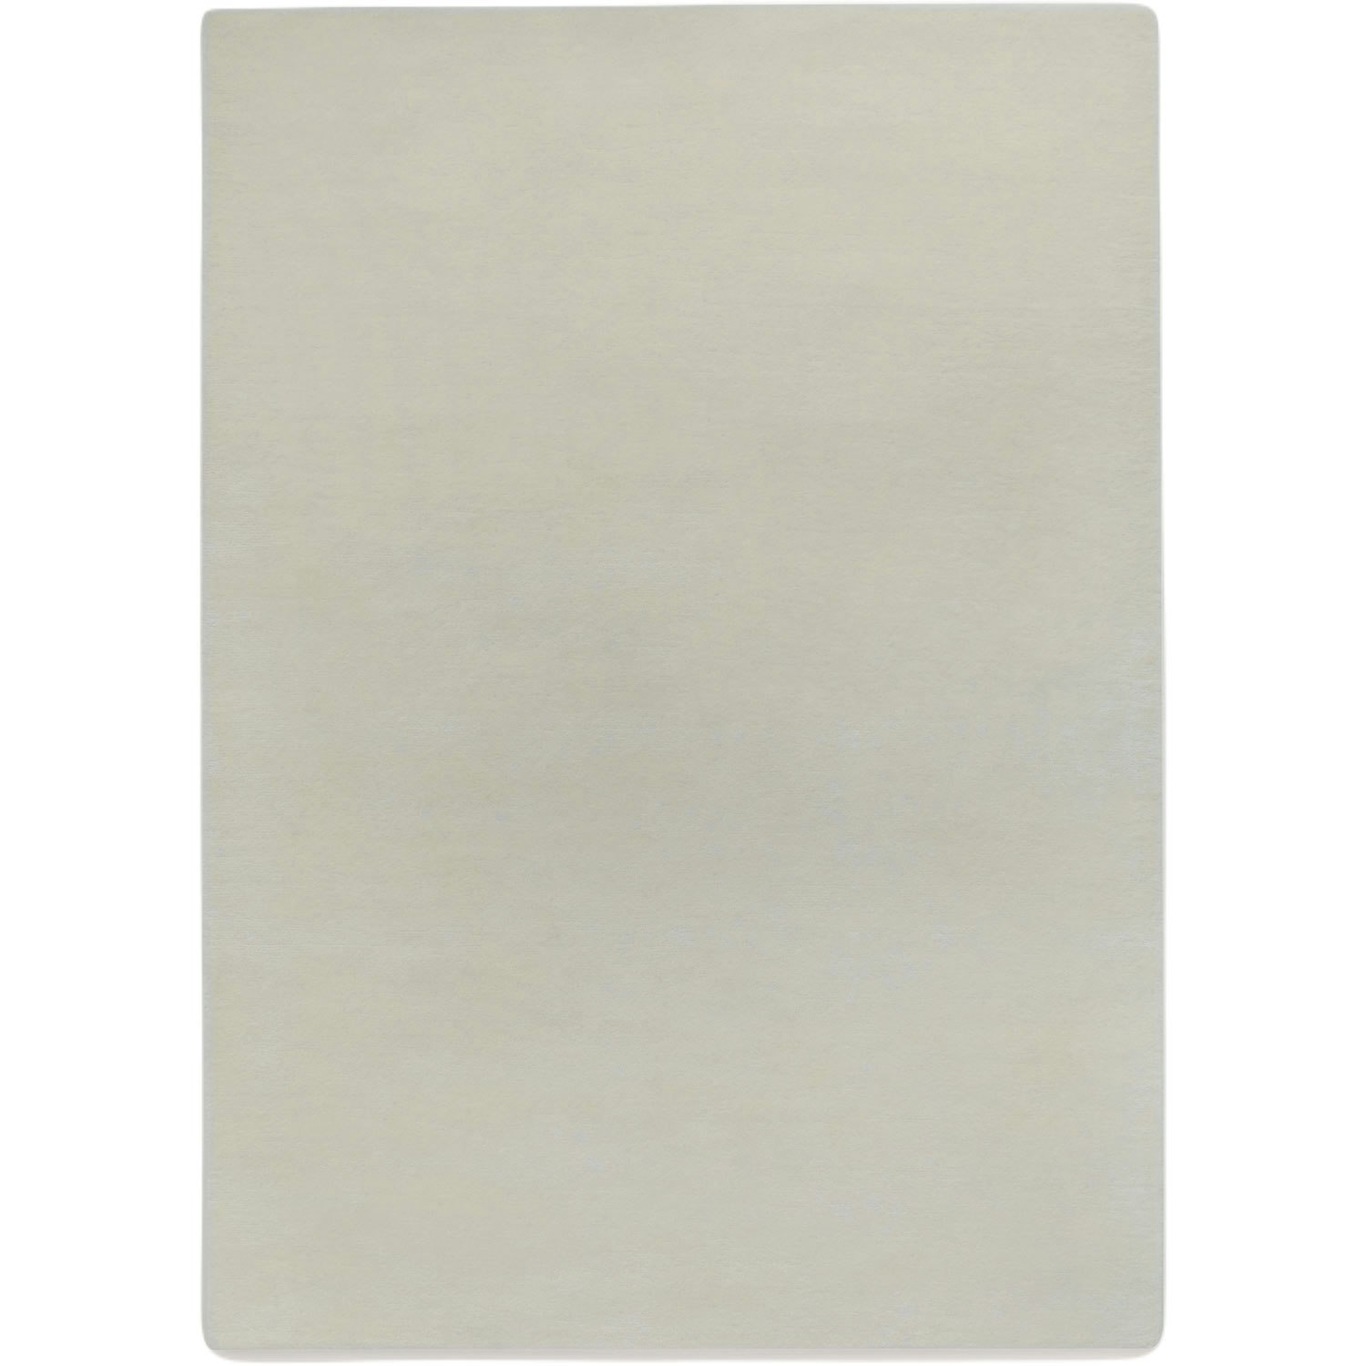 Liljehok Ullteppe Off-white, 170x240 cm